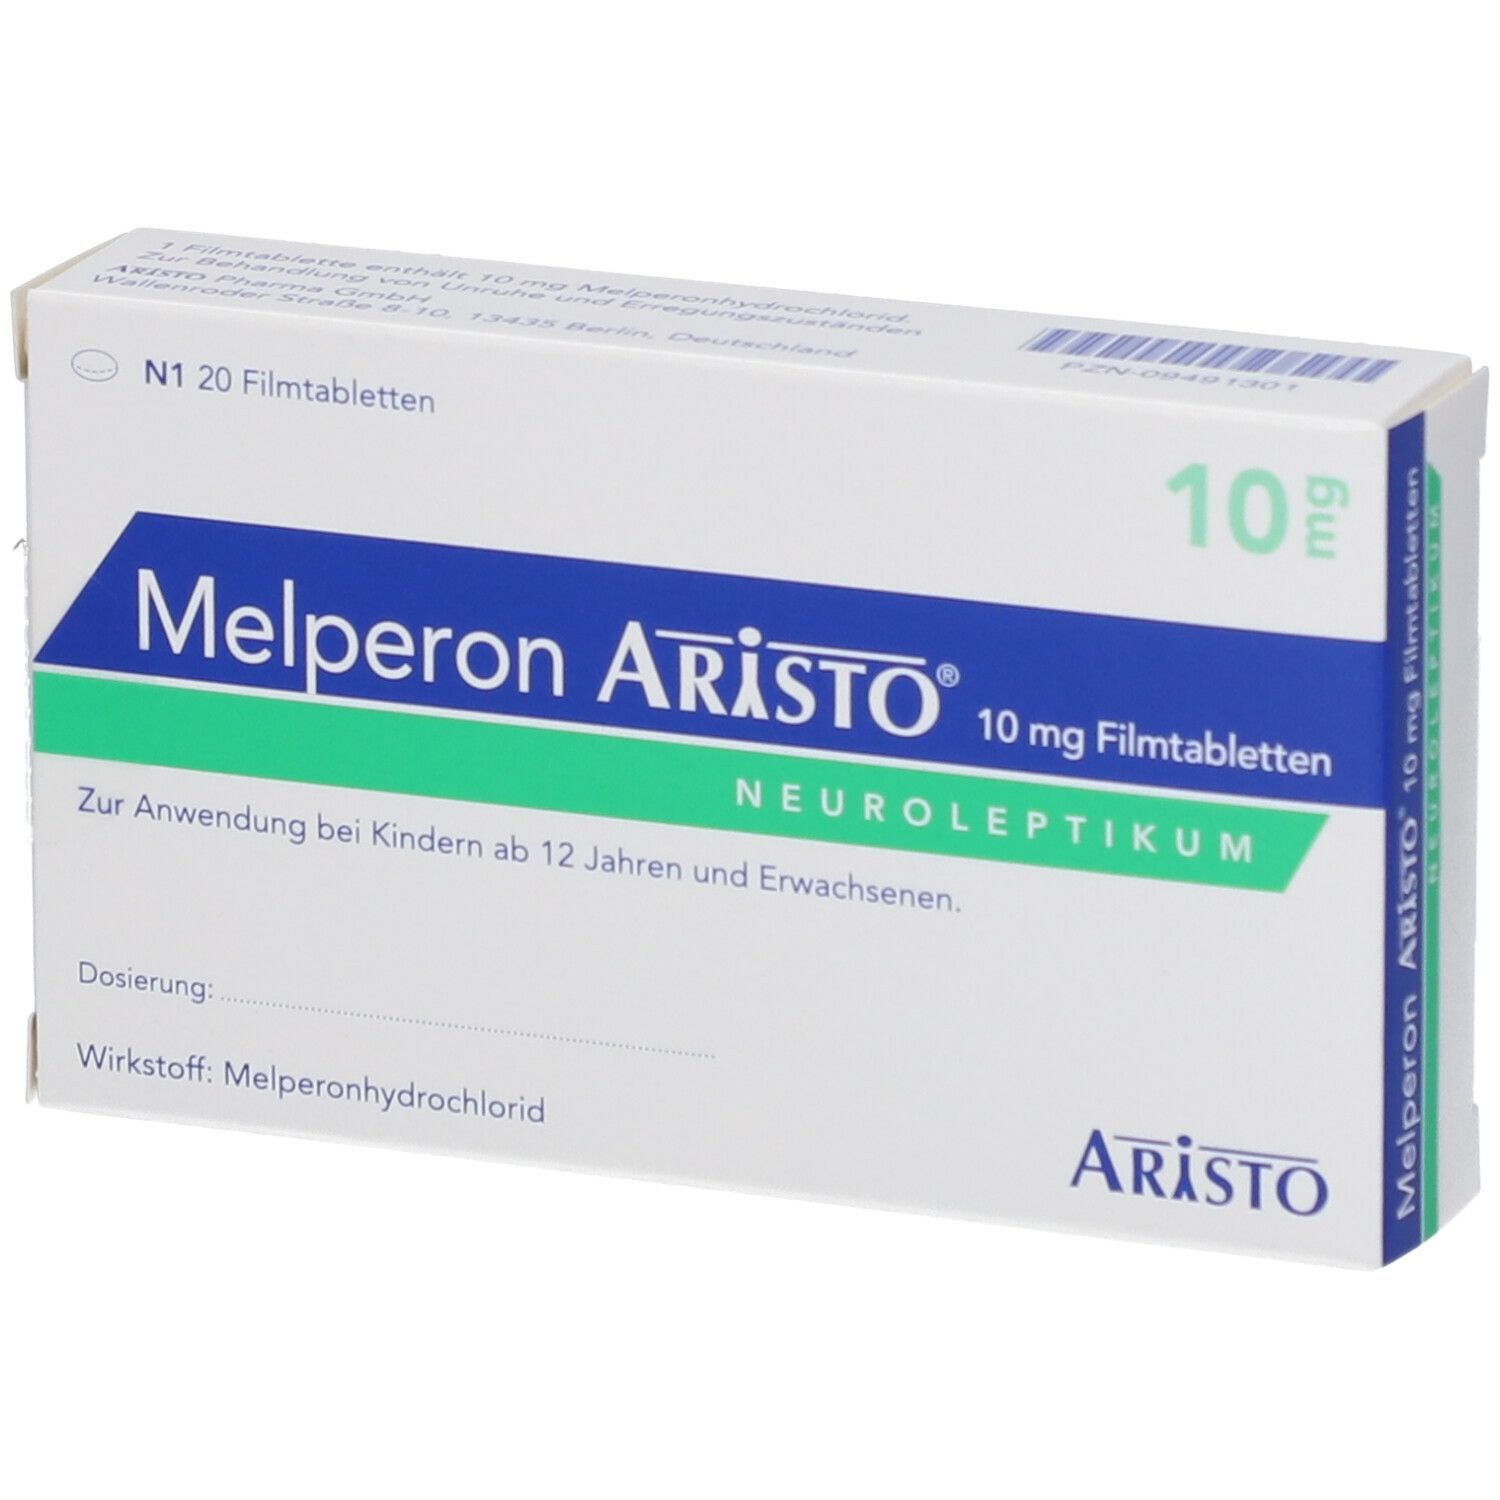 Melperon Aristo® 10 mg